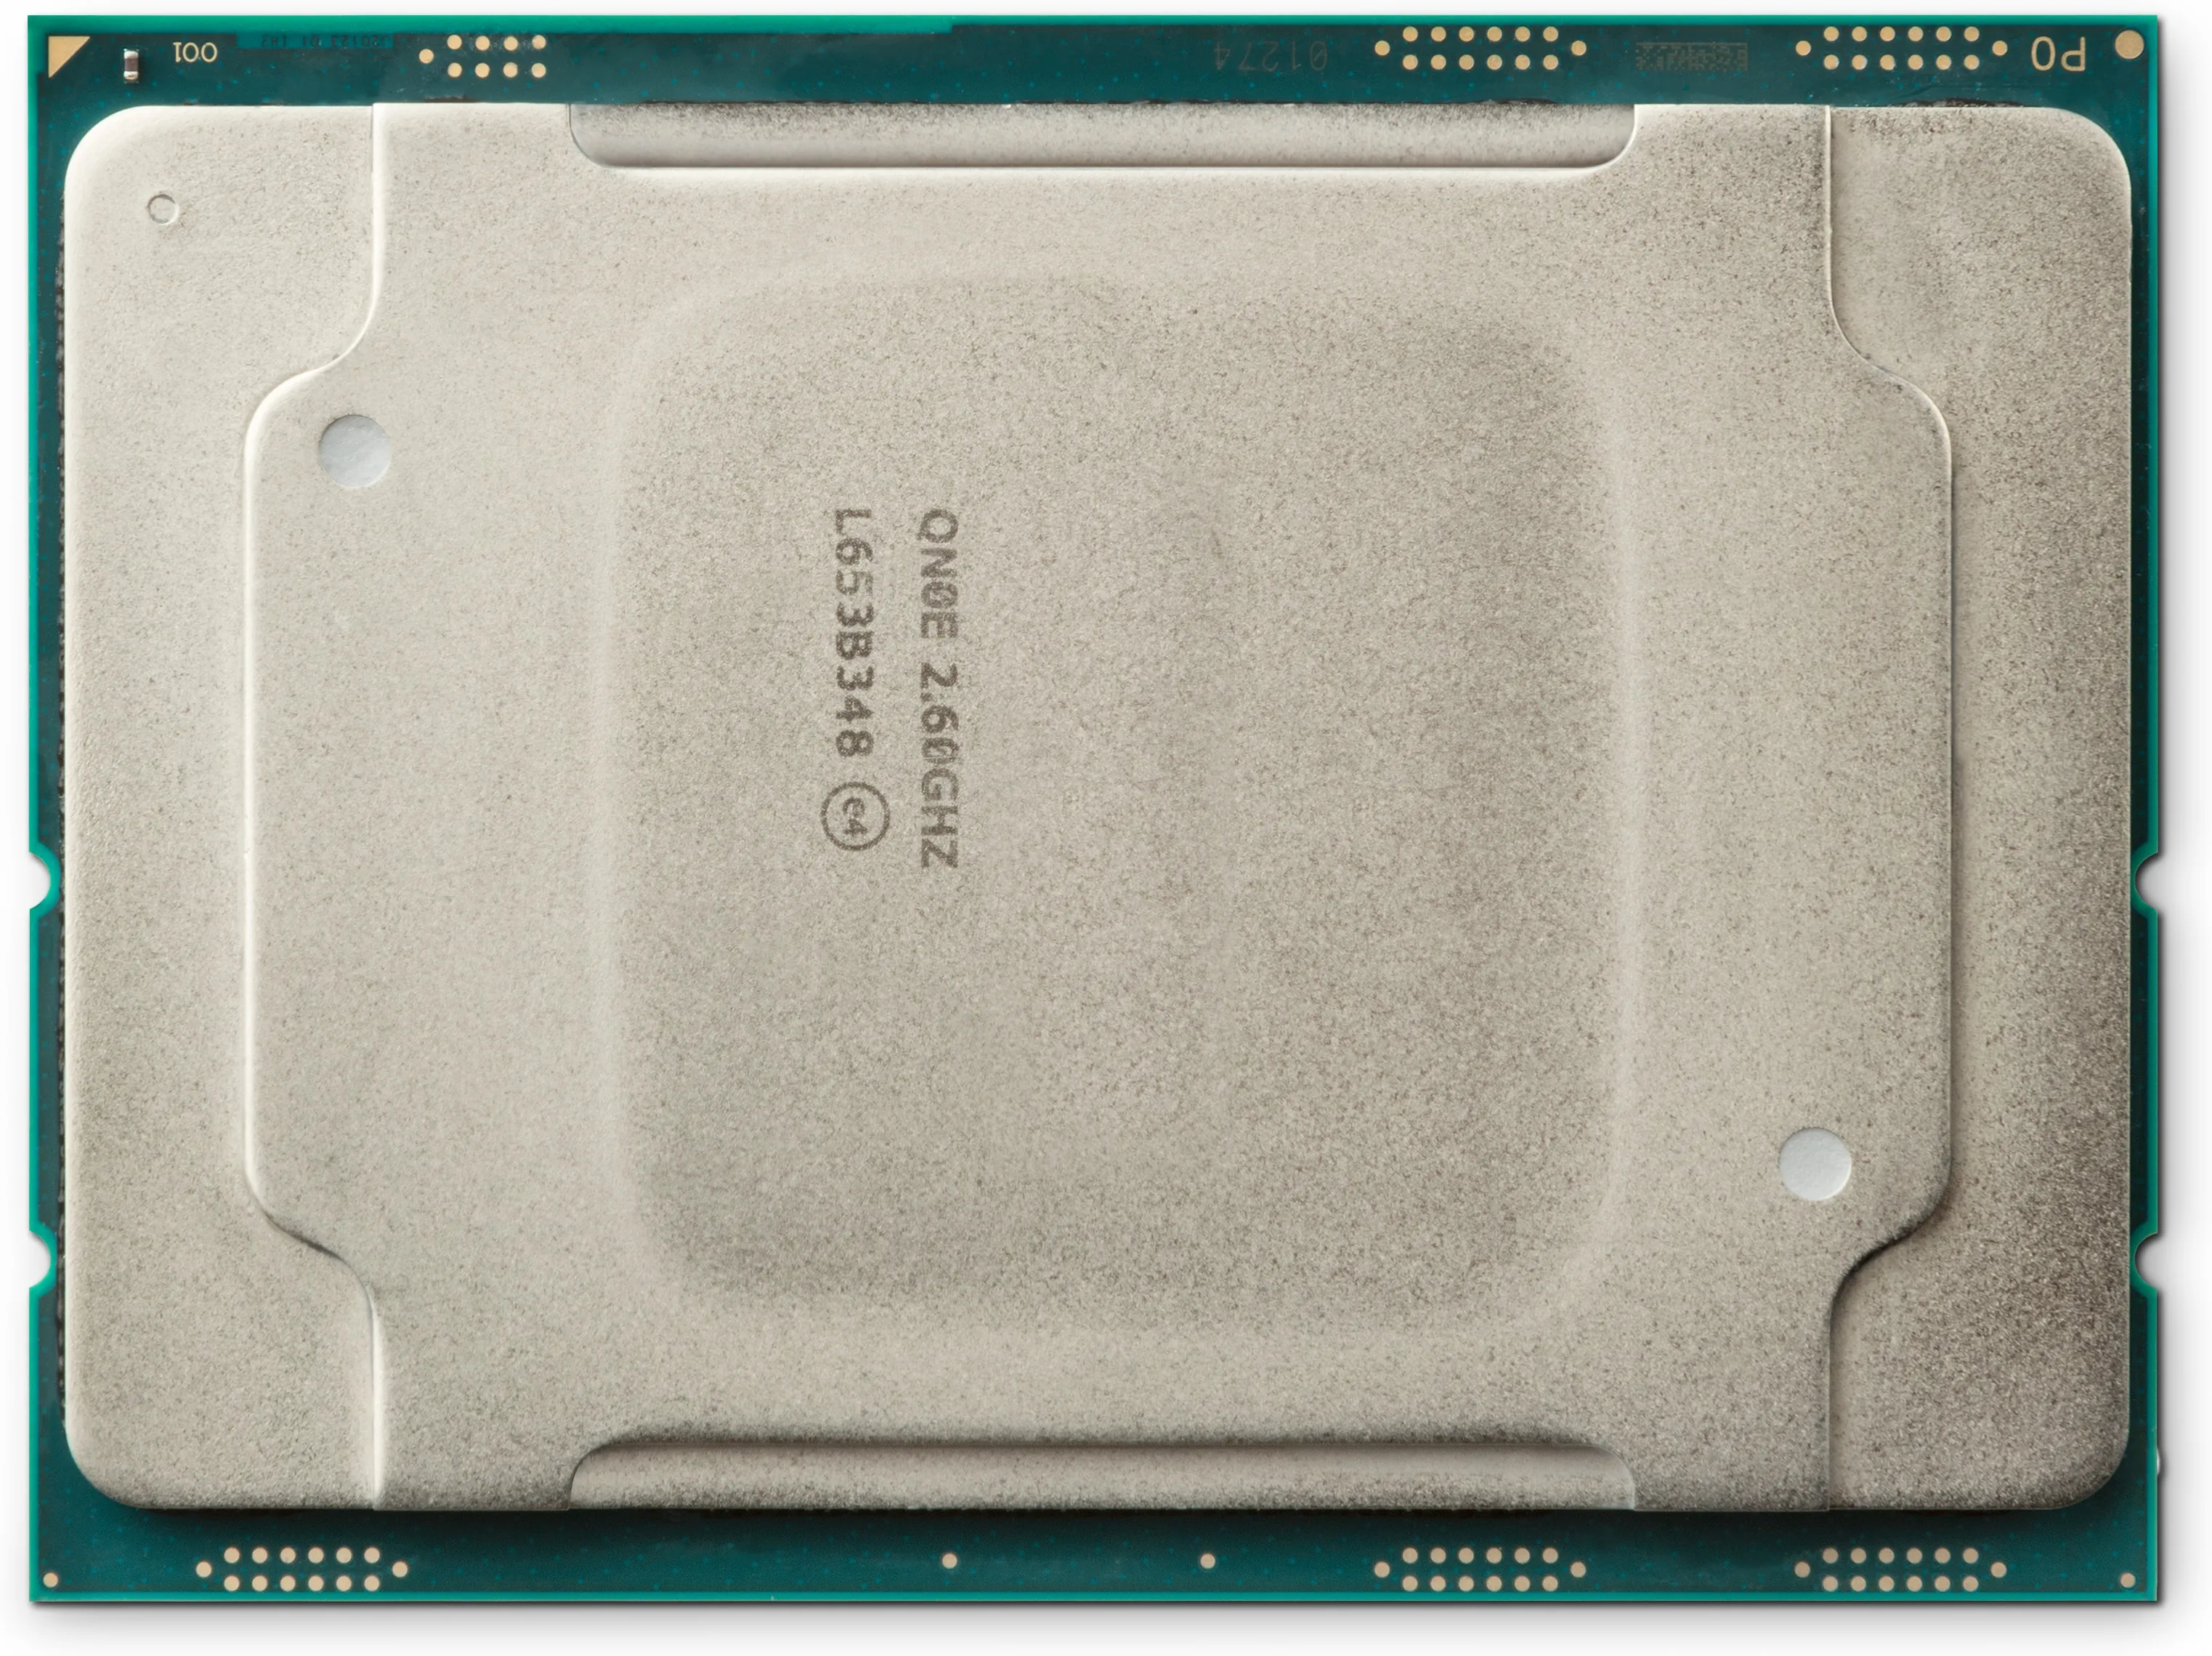 Vente HP Z6G4 Xeon 6242 2.8 2933 16C 150W HP au meilleur prix - visuel 4